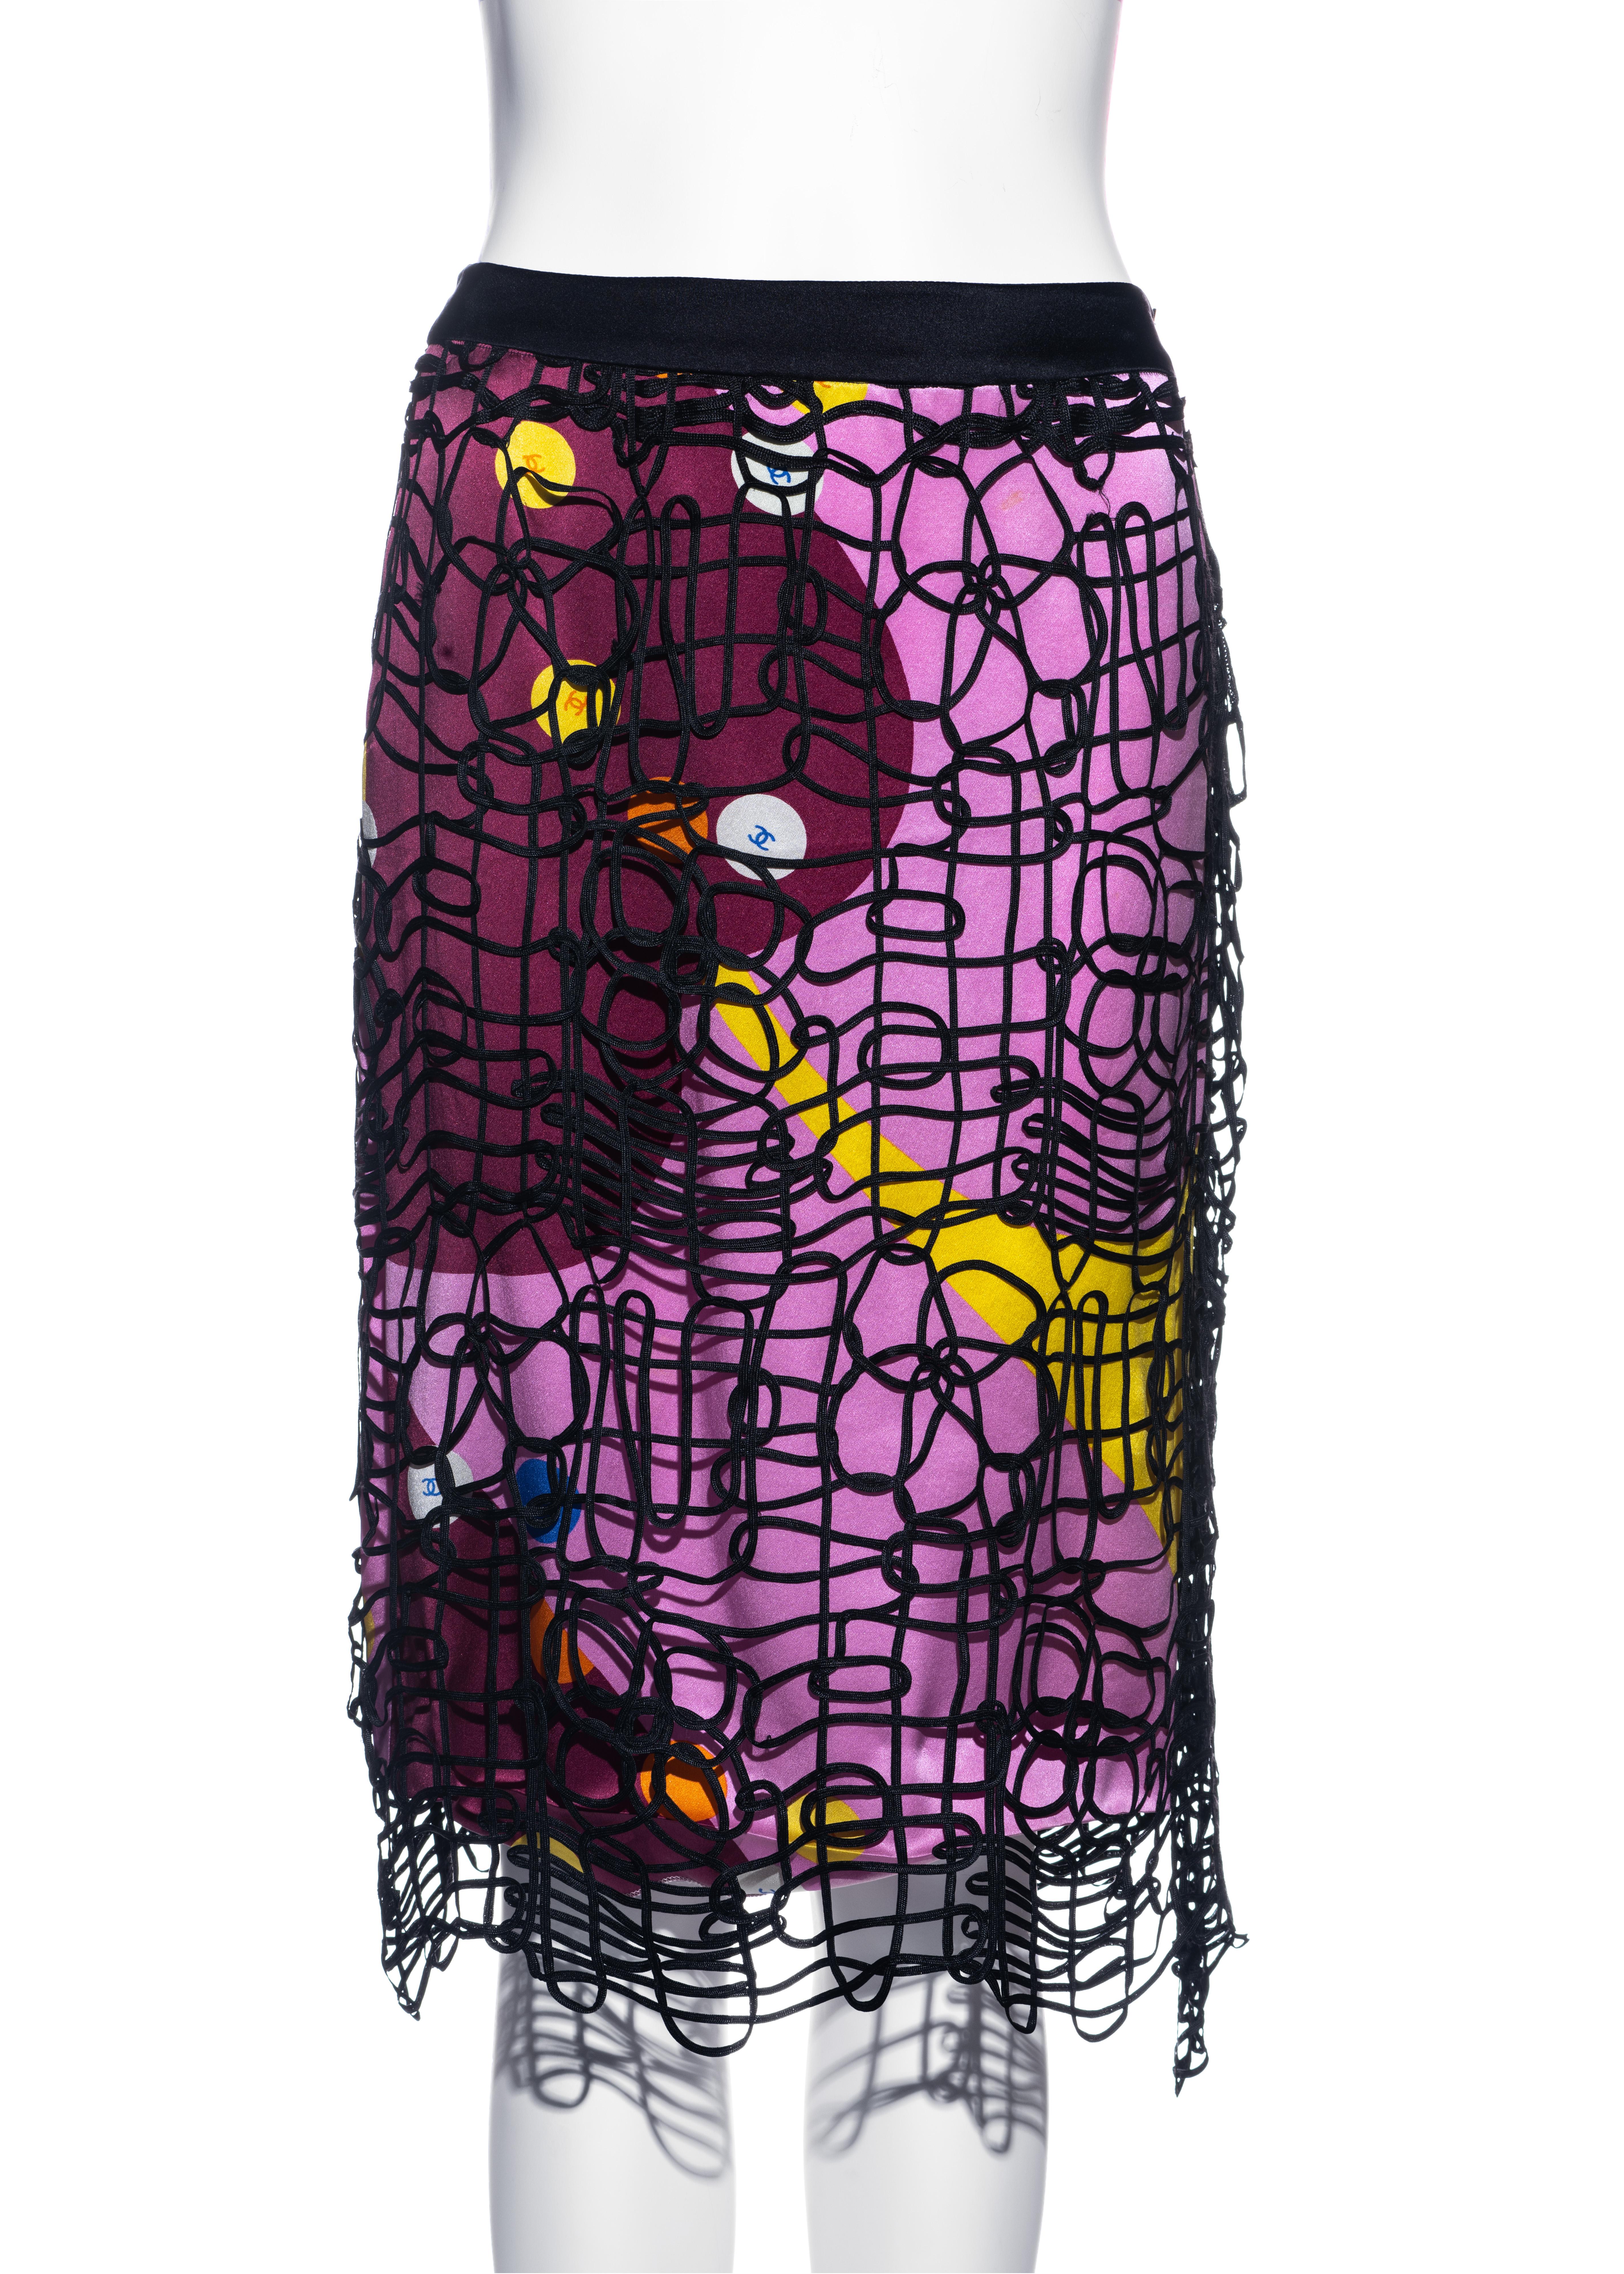 ▪ Chanel multicoloured floral silk skirt
▪ Designed by Karl Lagerfeld
▪ Black ribbon overlay 
▪ 'CC' engraved buttons 
▪ FR 36 - UK 8 - US 4
▪ Spring-Summer 2000